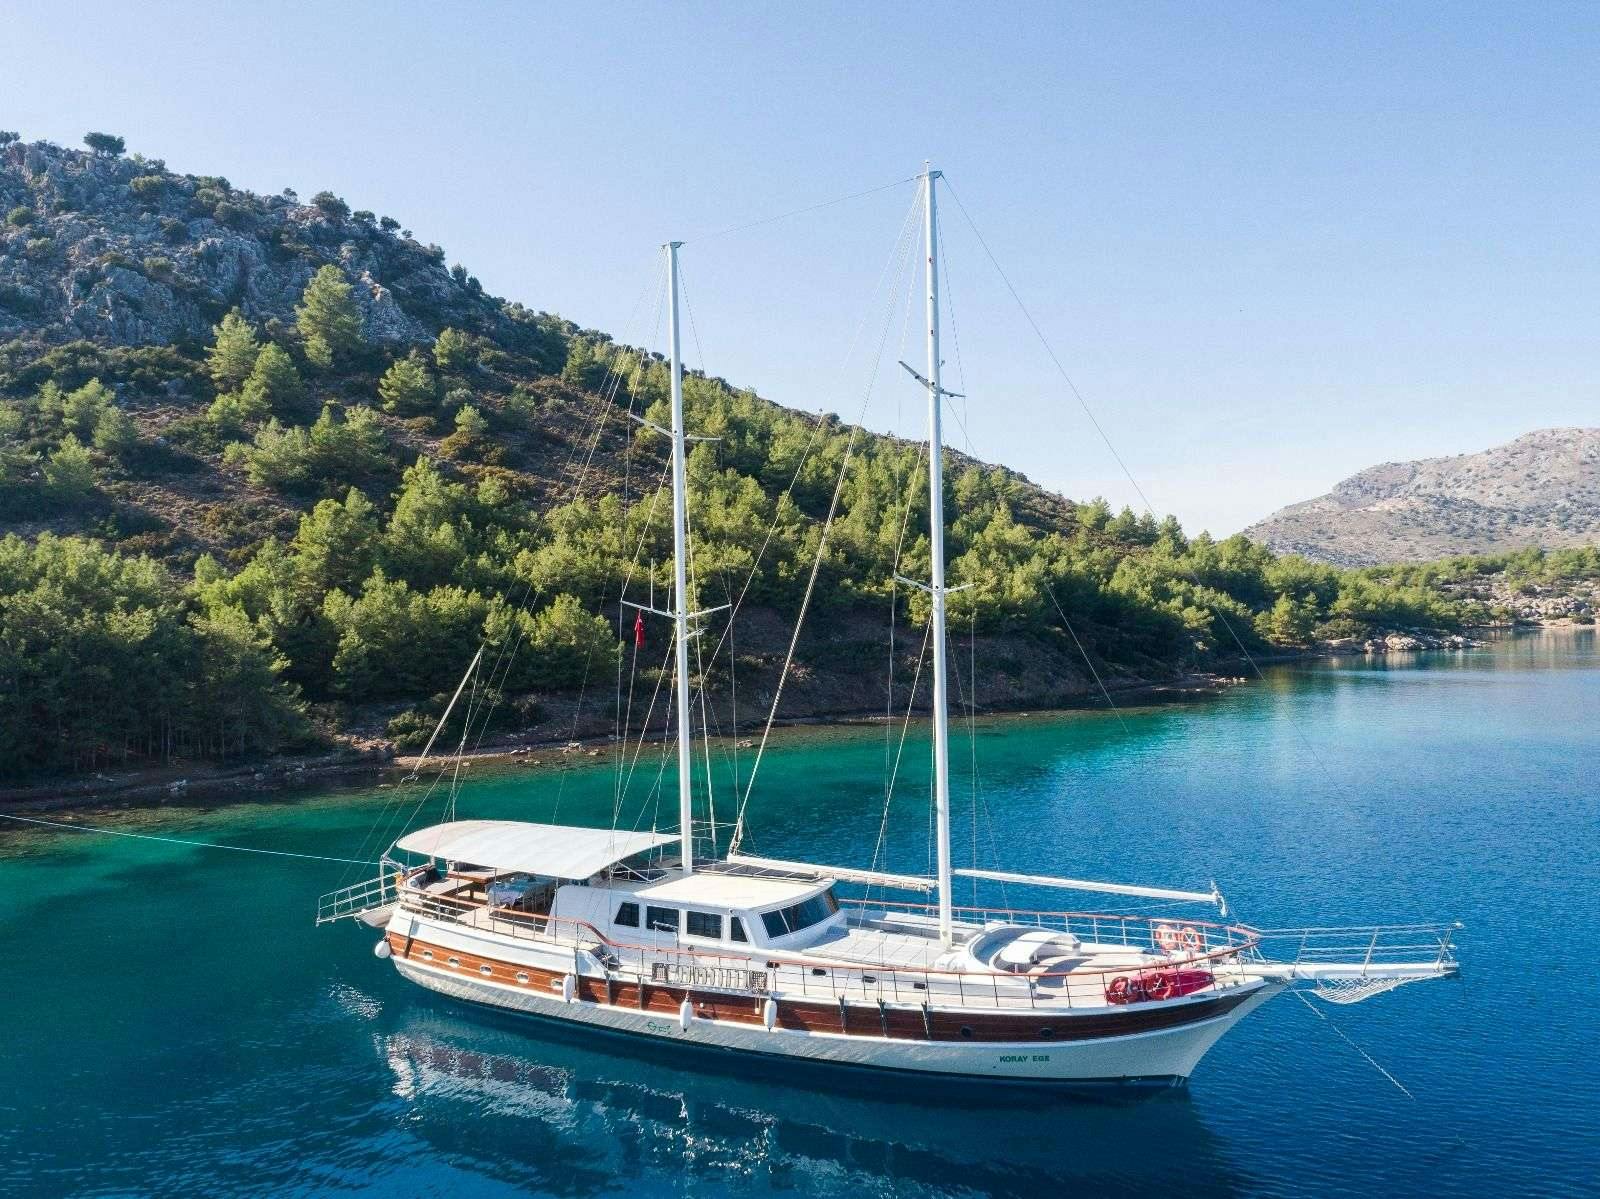 koray ege - Yacht Charter Antalya & Boat hire in Greece & Turkey 1